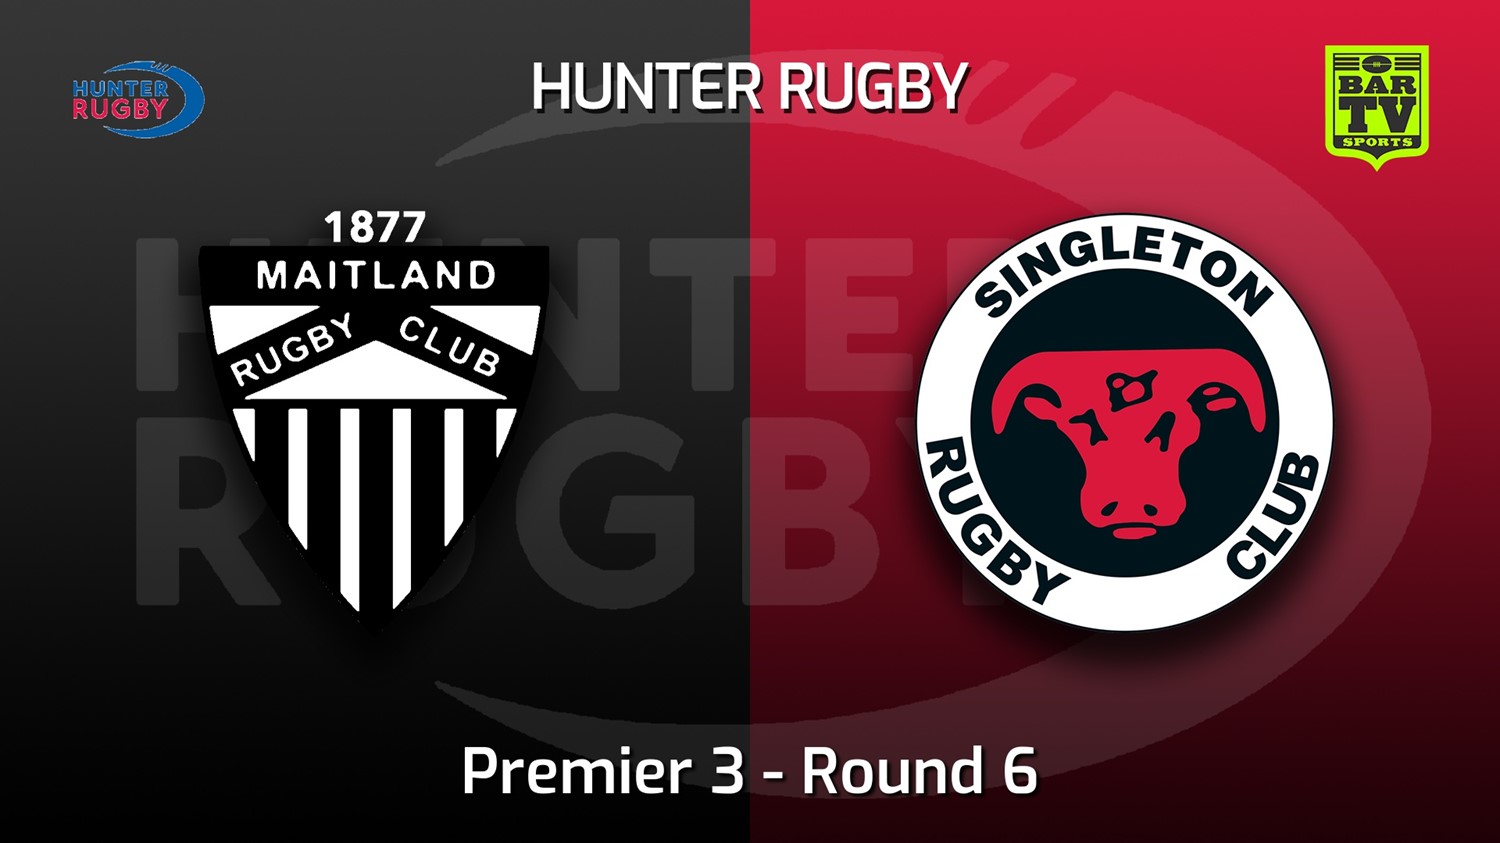 220528-Hunter Rugby Round 6 - Premier 3 - Maitland v Singleton Bulls Slate Image